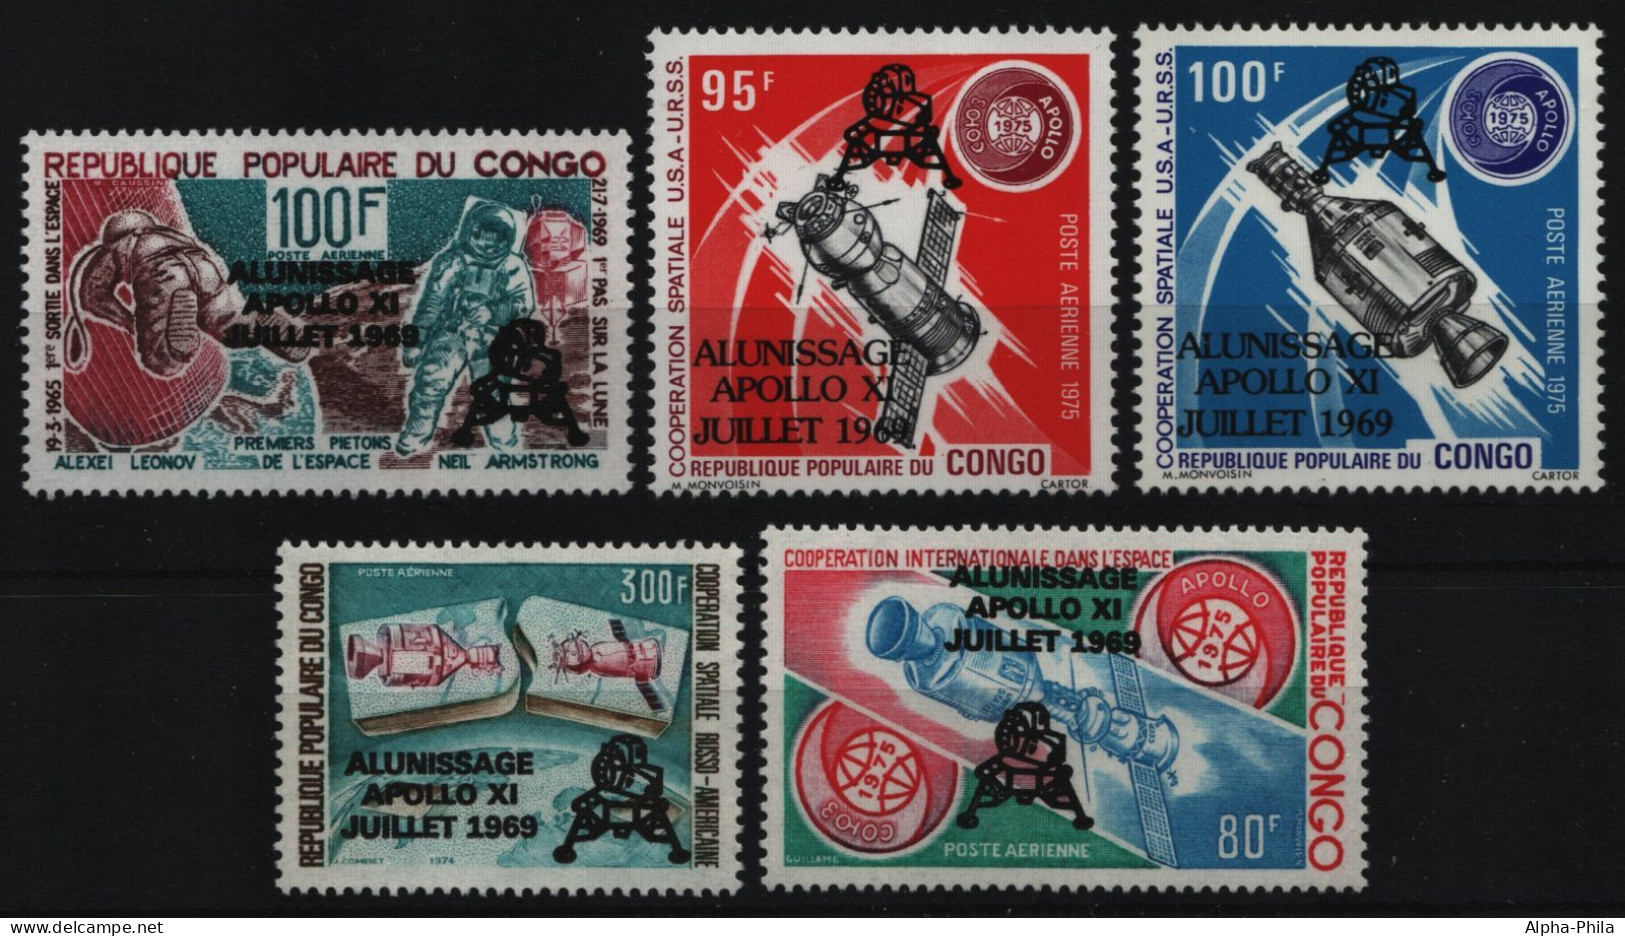 Kongo-Brazzaville 1979 - Mi-Nr. 702-706 ** - MNH - Raumfahrt / Space - Mint/hinged